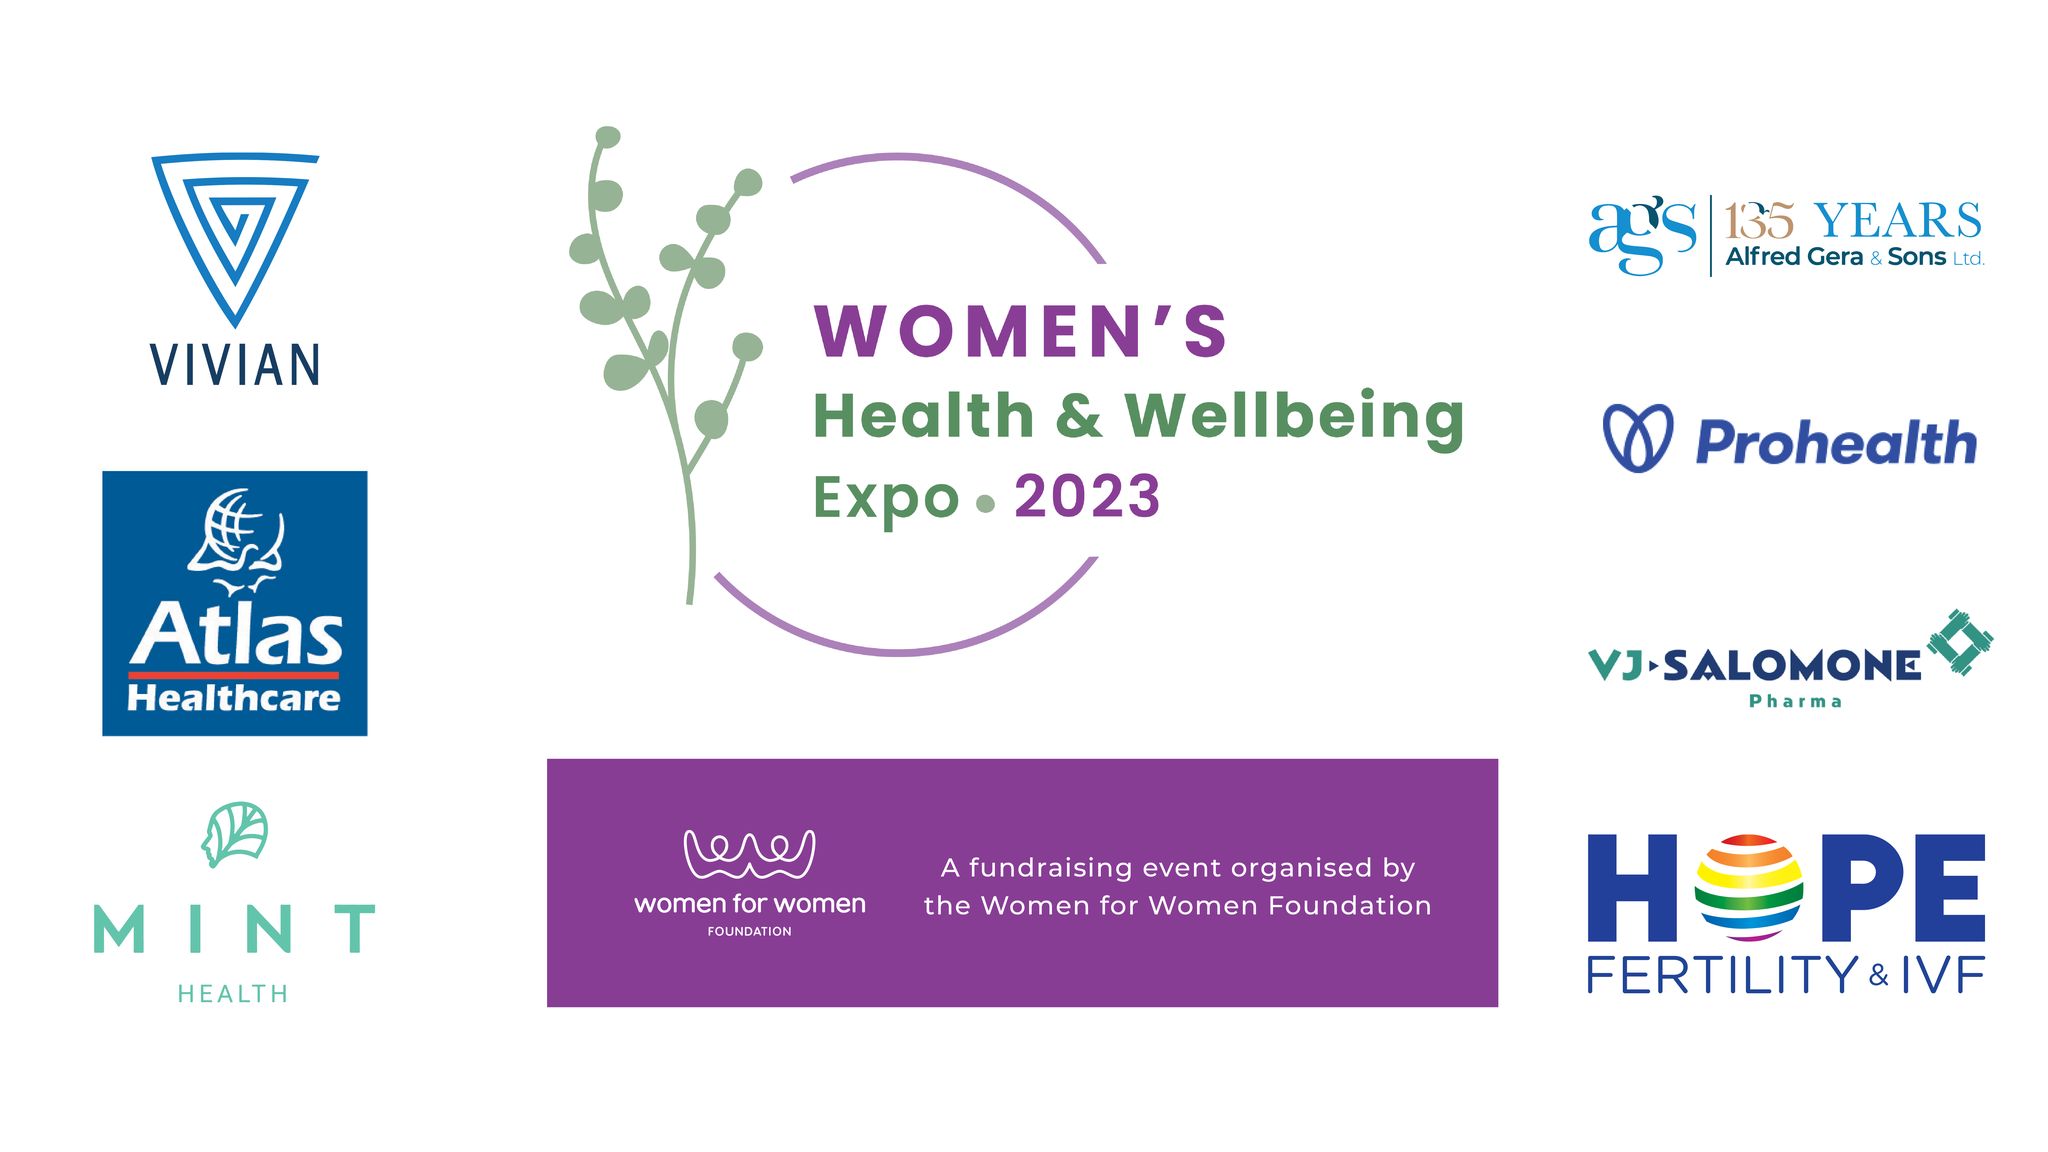 Women's Health & Wellbeing Expo 2023